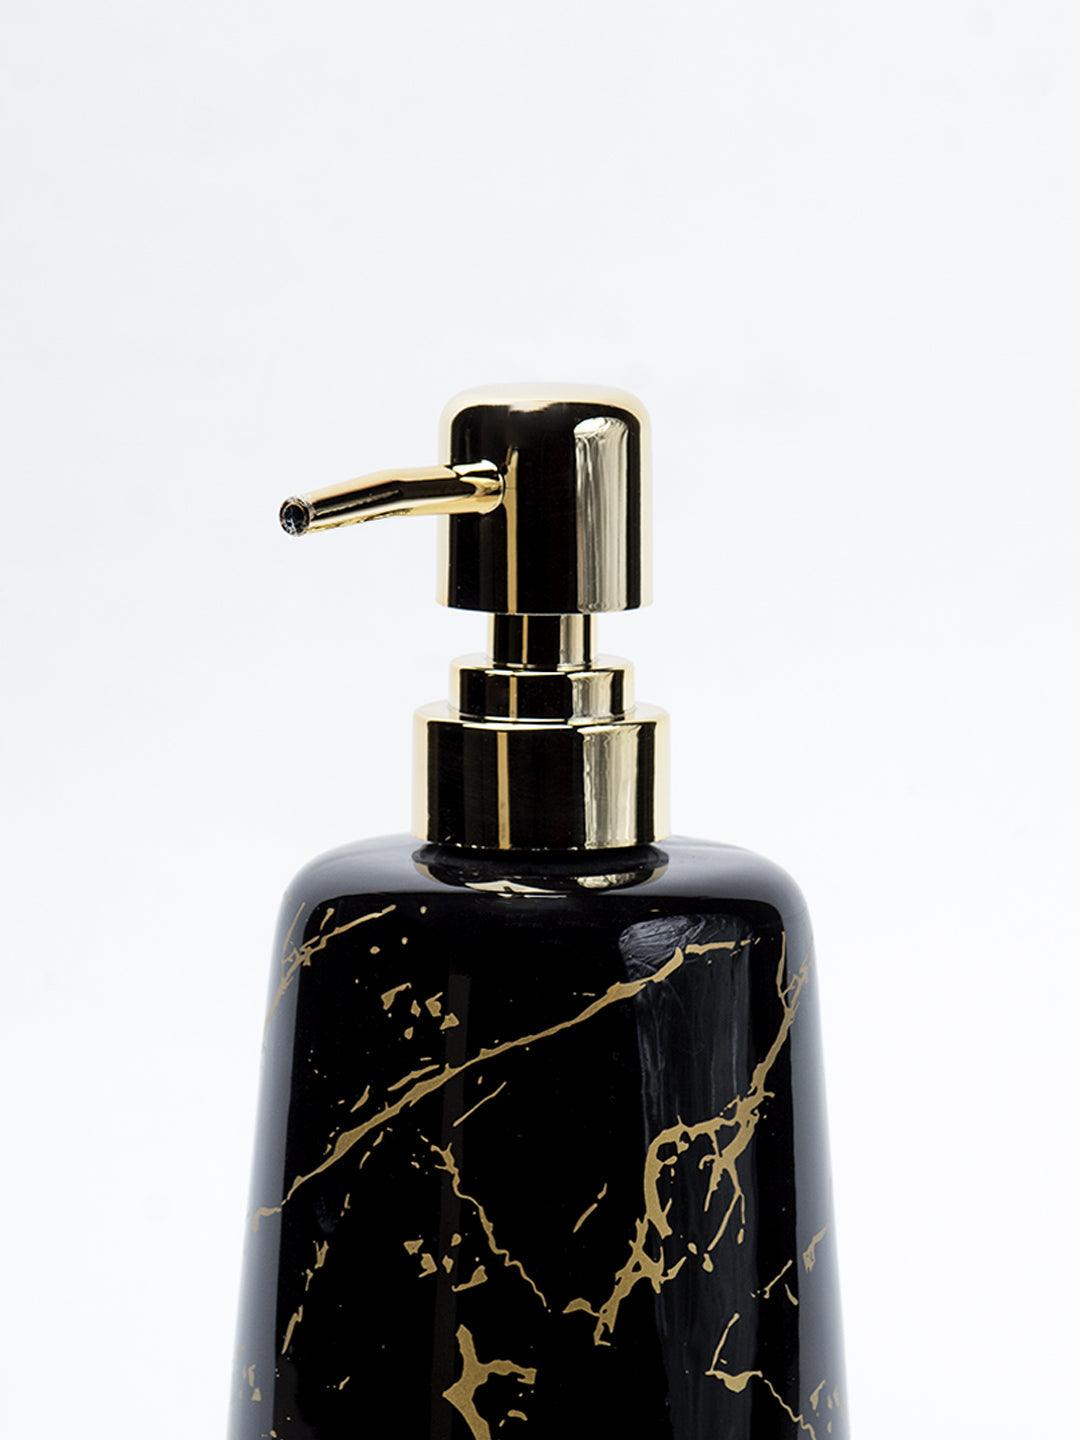 Black Ceramic Liquid Soap Dispenser - Stone Finish, Bath Accessories - 4